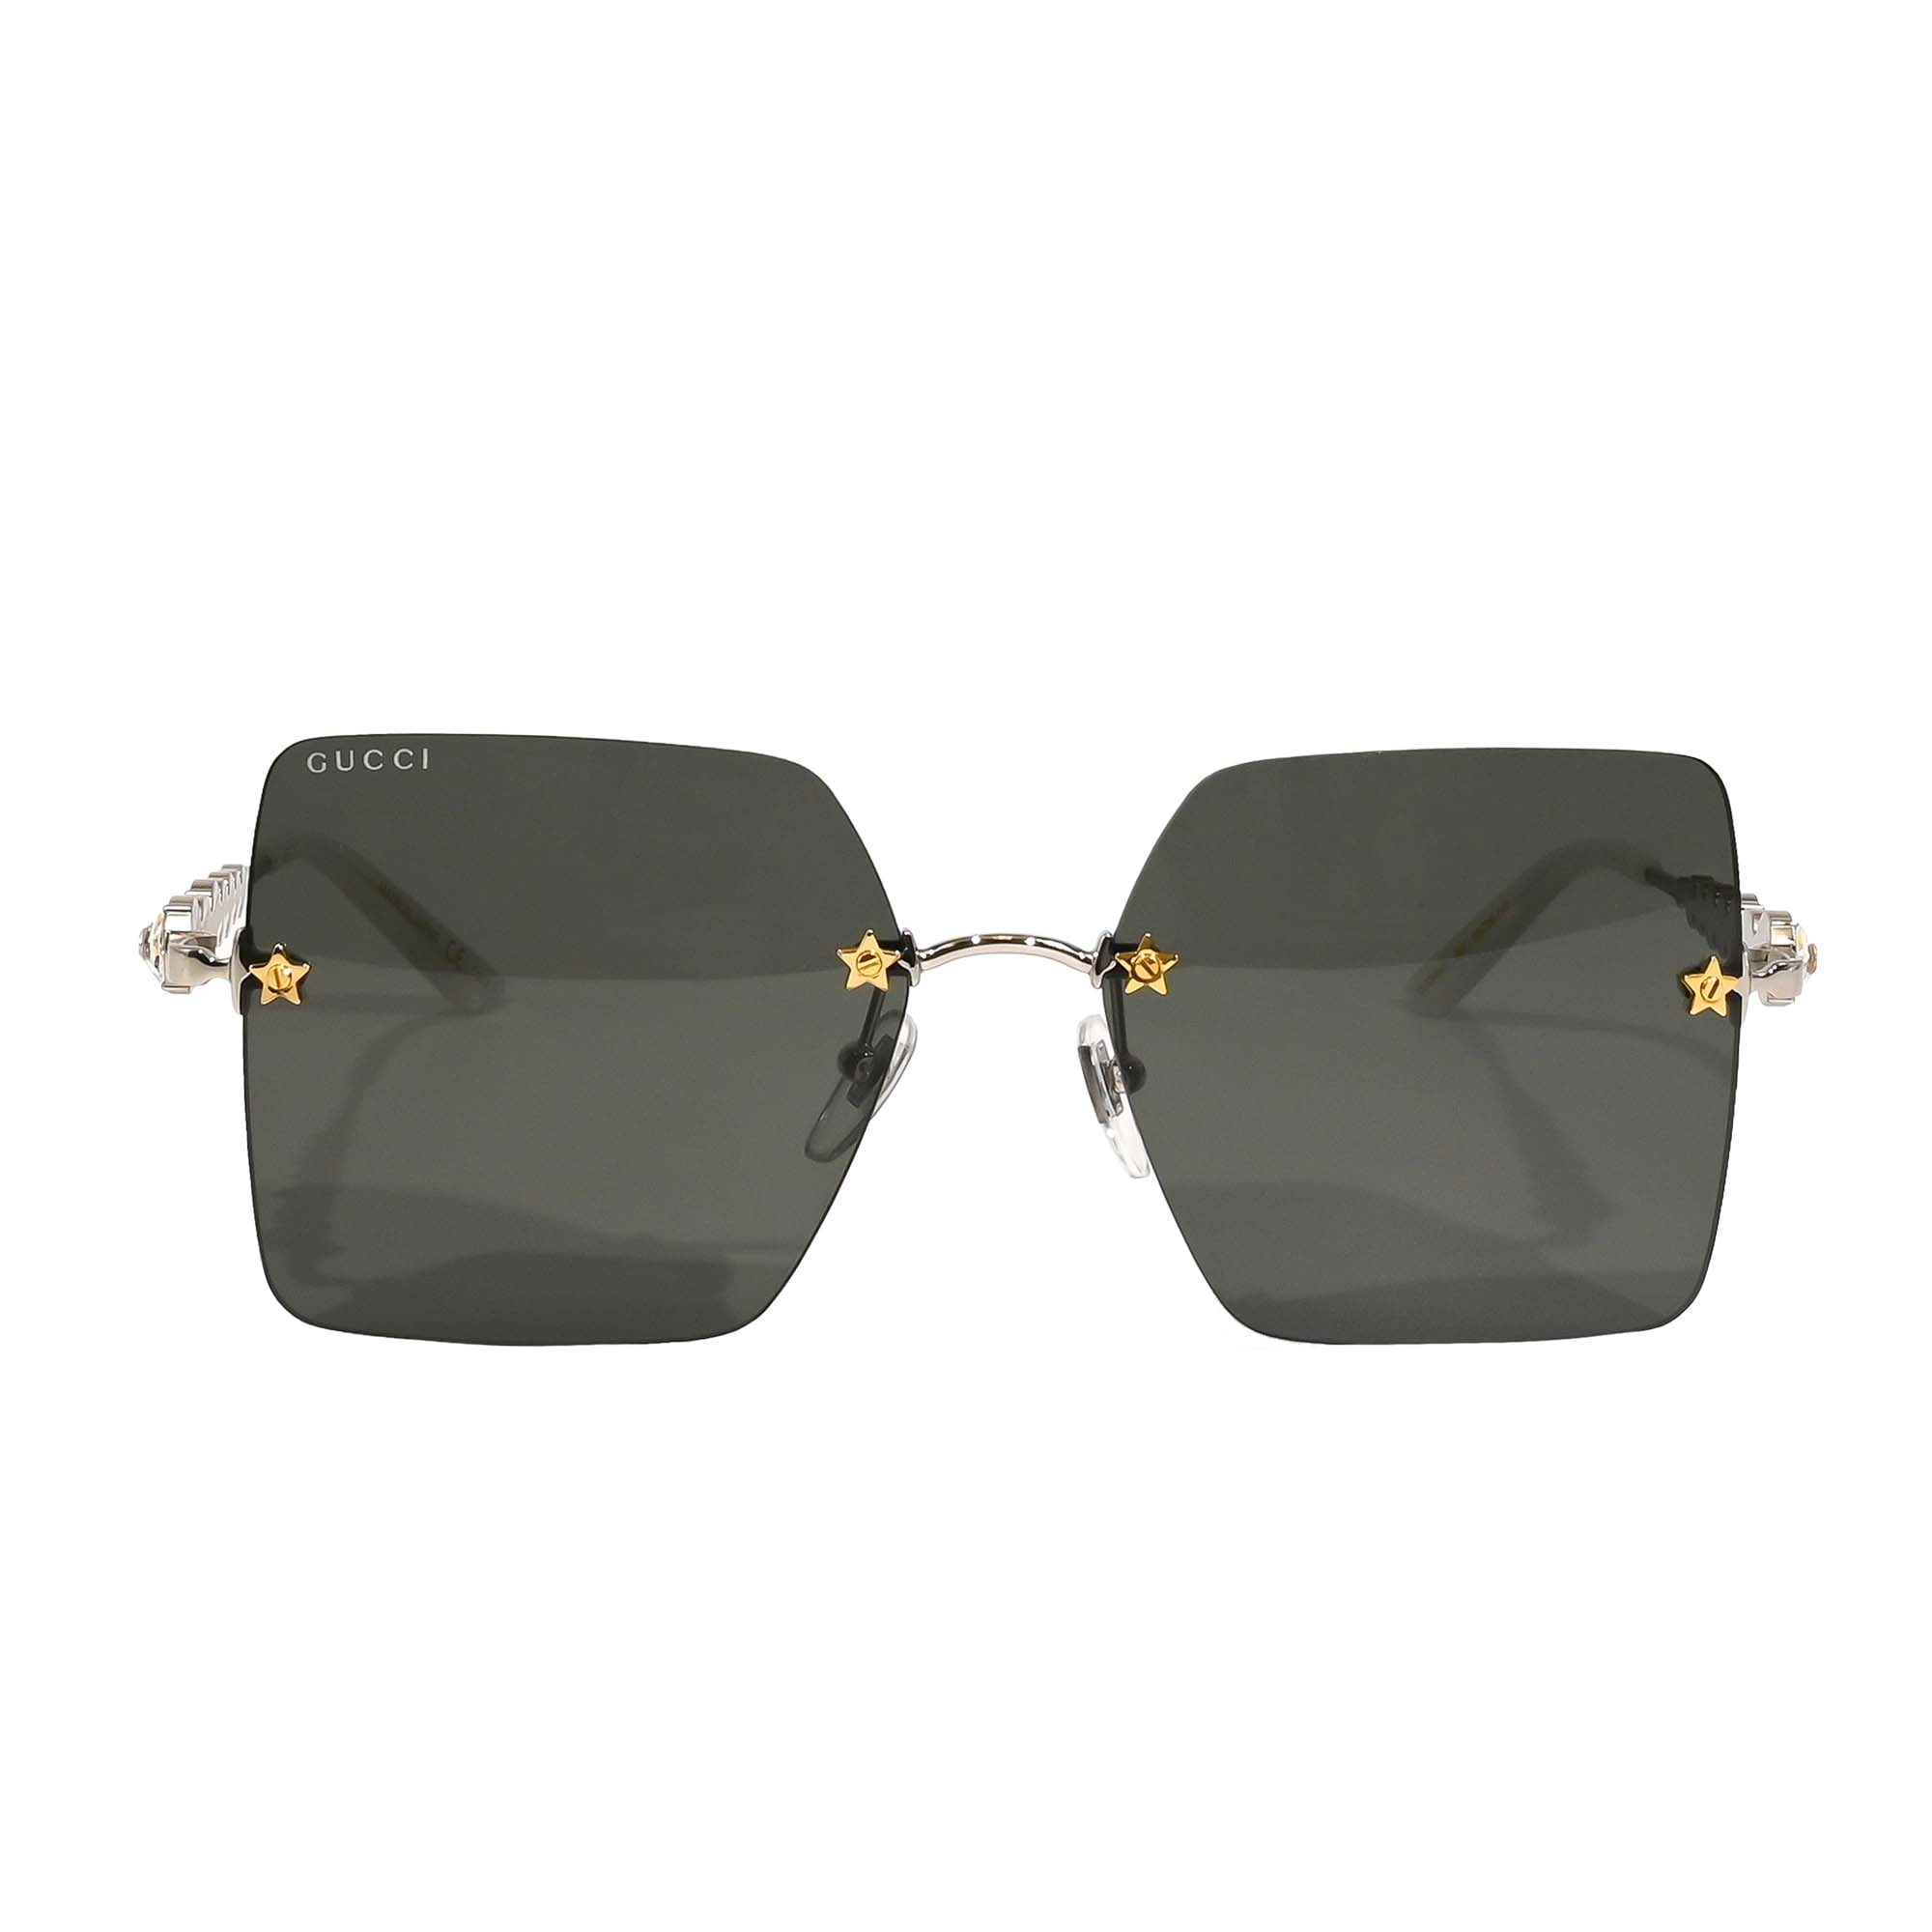 Gucci Women's Grey Fashion Inspired Sunglasses - GG0644S-001 